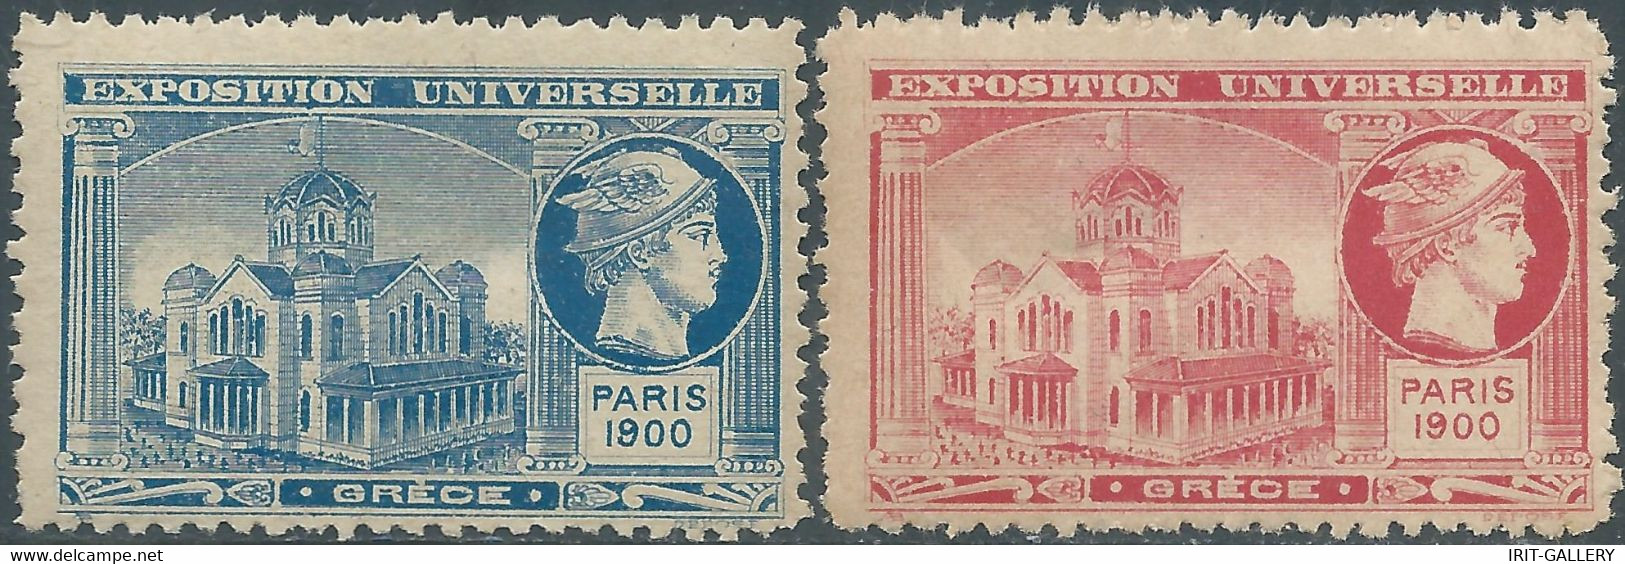 France,Paris 1900 UNIVERSAL EXHIBITION OF Greece ,Trace Of Hinged - 1900 – Parigi (Francia)